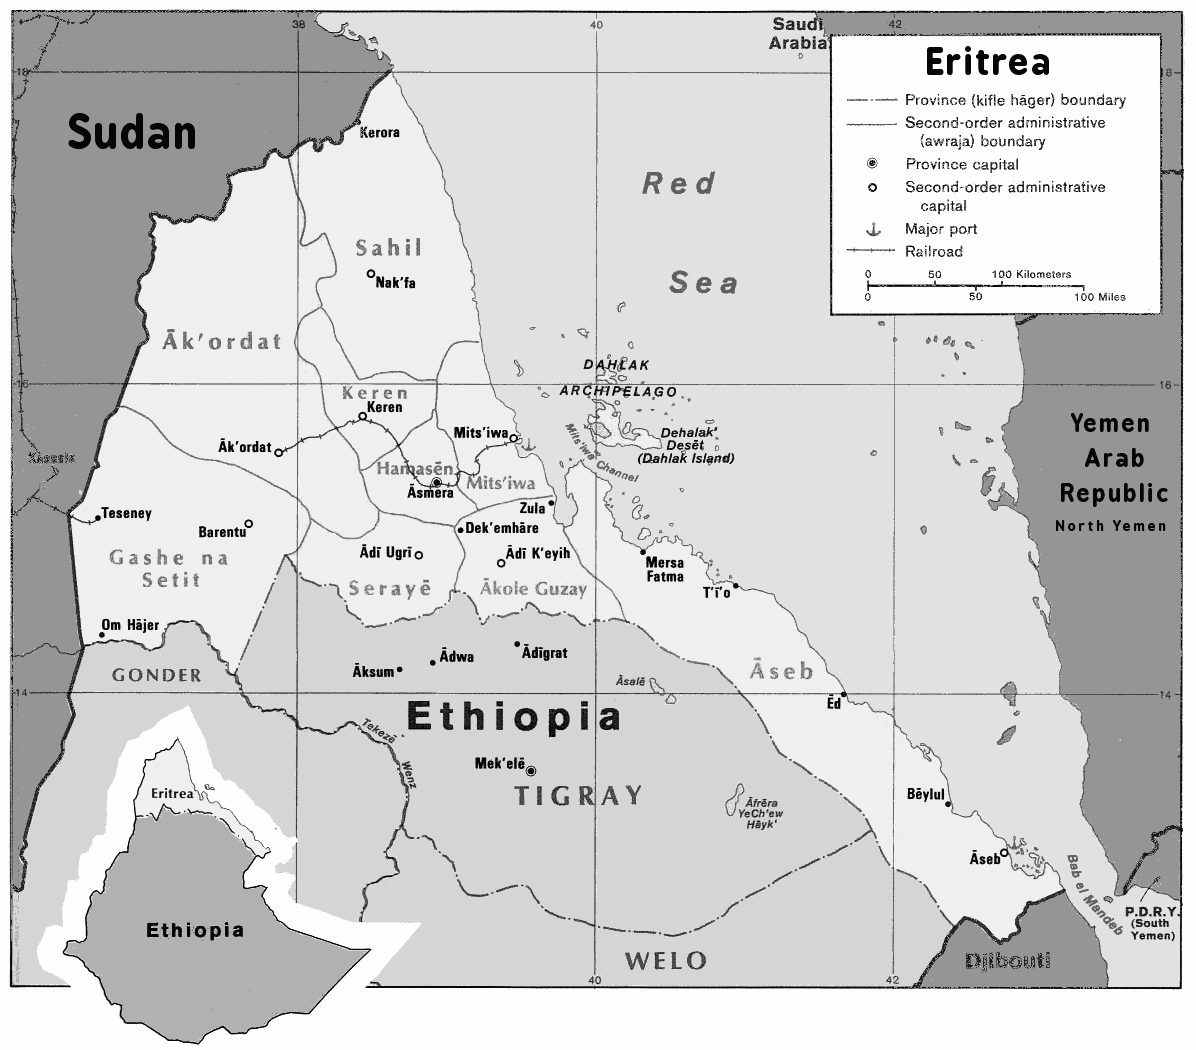 Eritrea political 1986